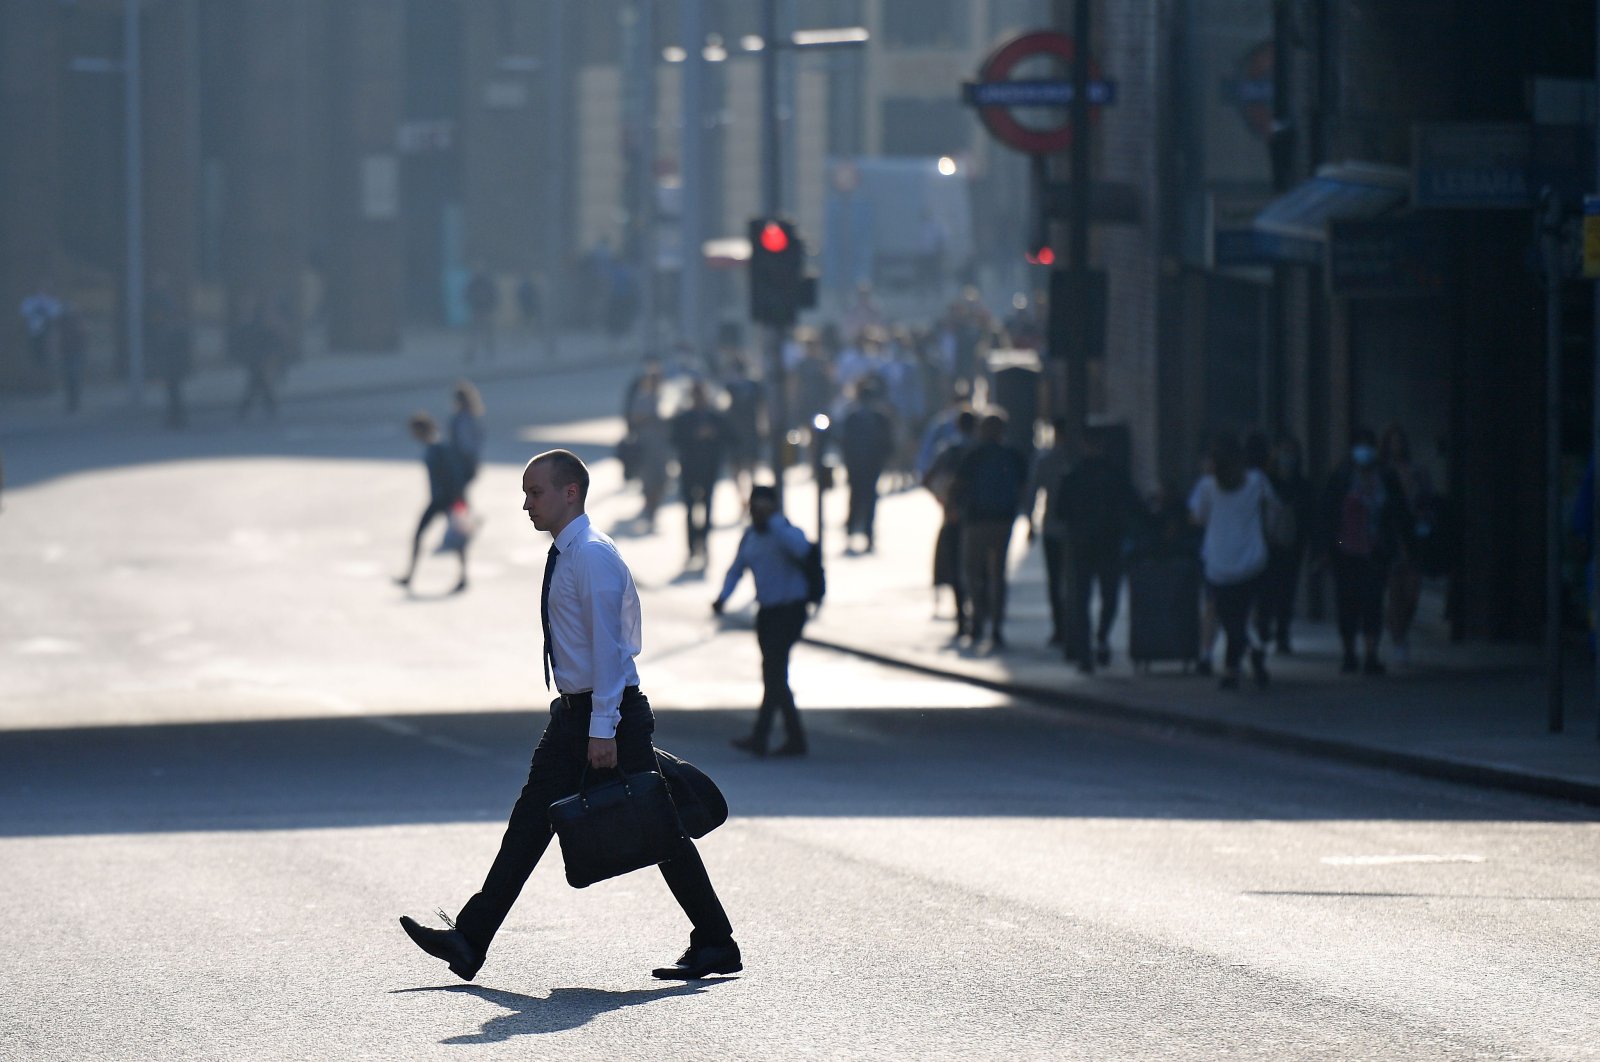 A commuter crosses a road by London Bridge in London, Britain, Sept. 15, 2020. (AFP Photo)